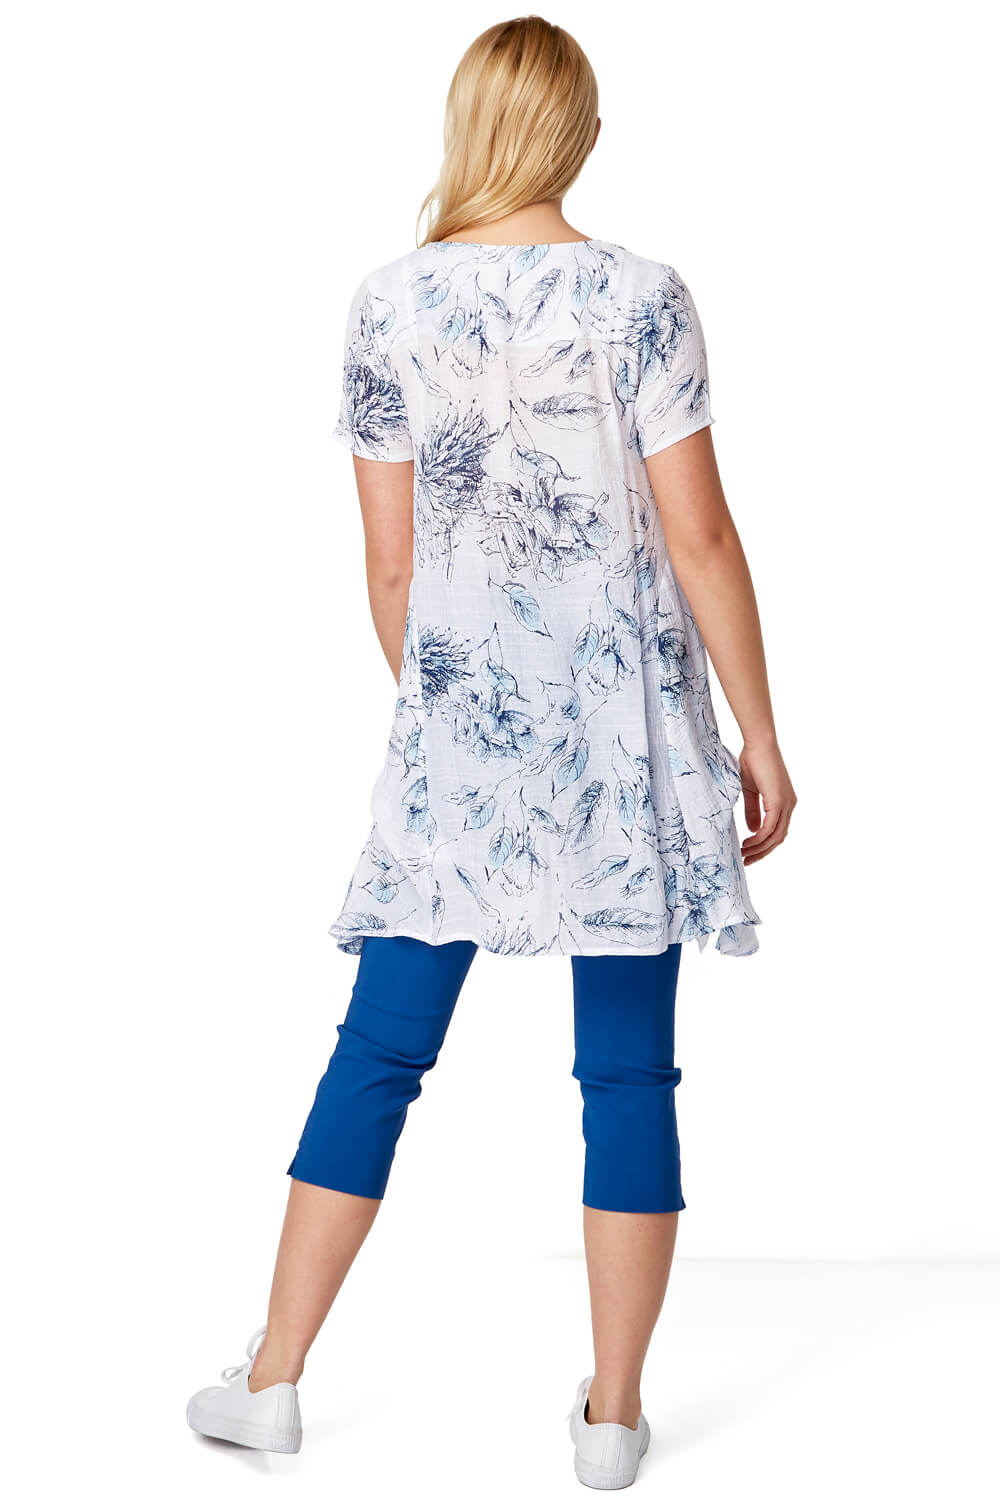 Blue Short Sleeve Floral Crinkle Top, Image 3 of 8